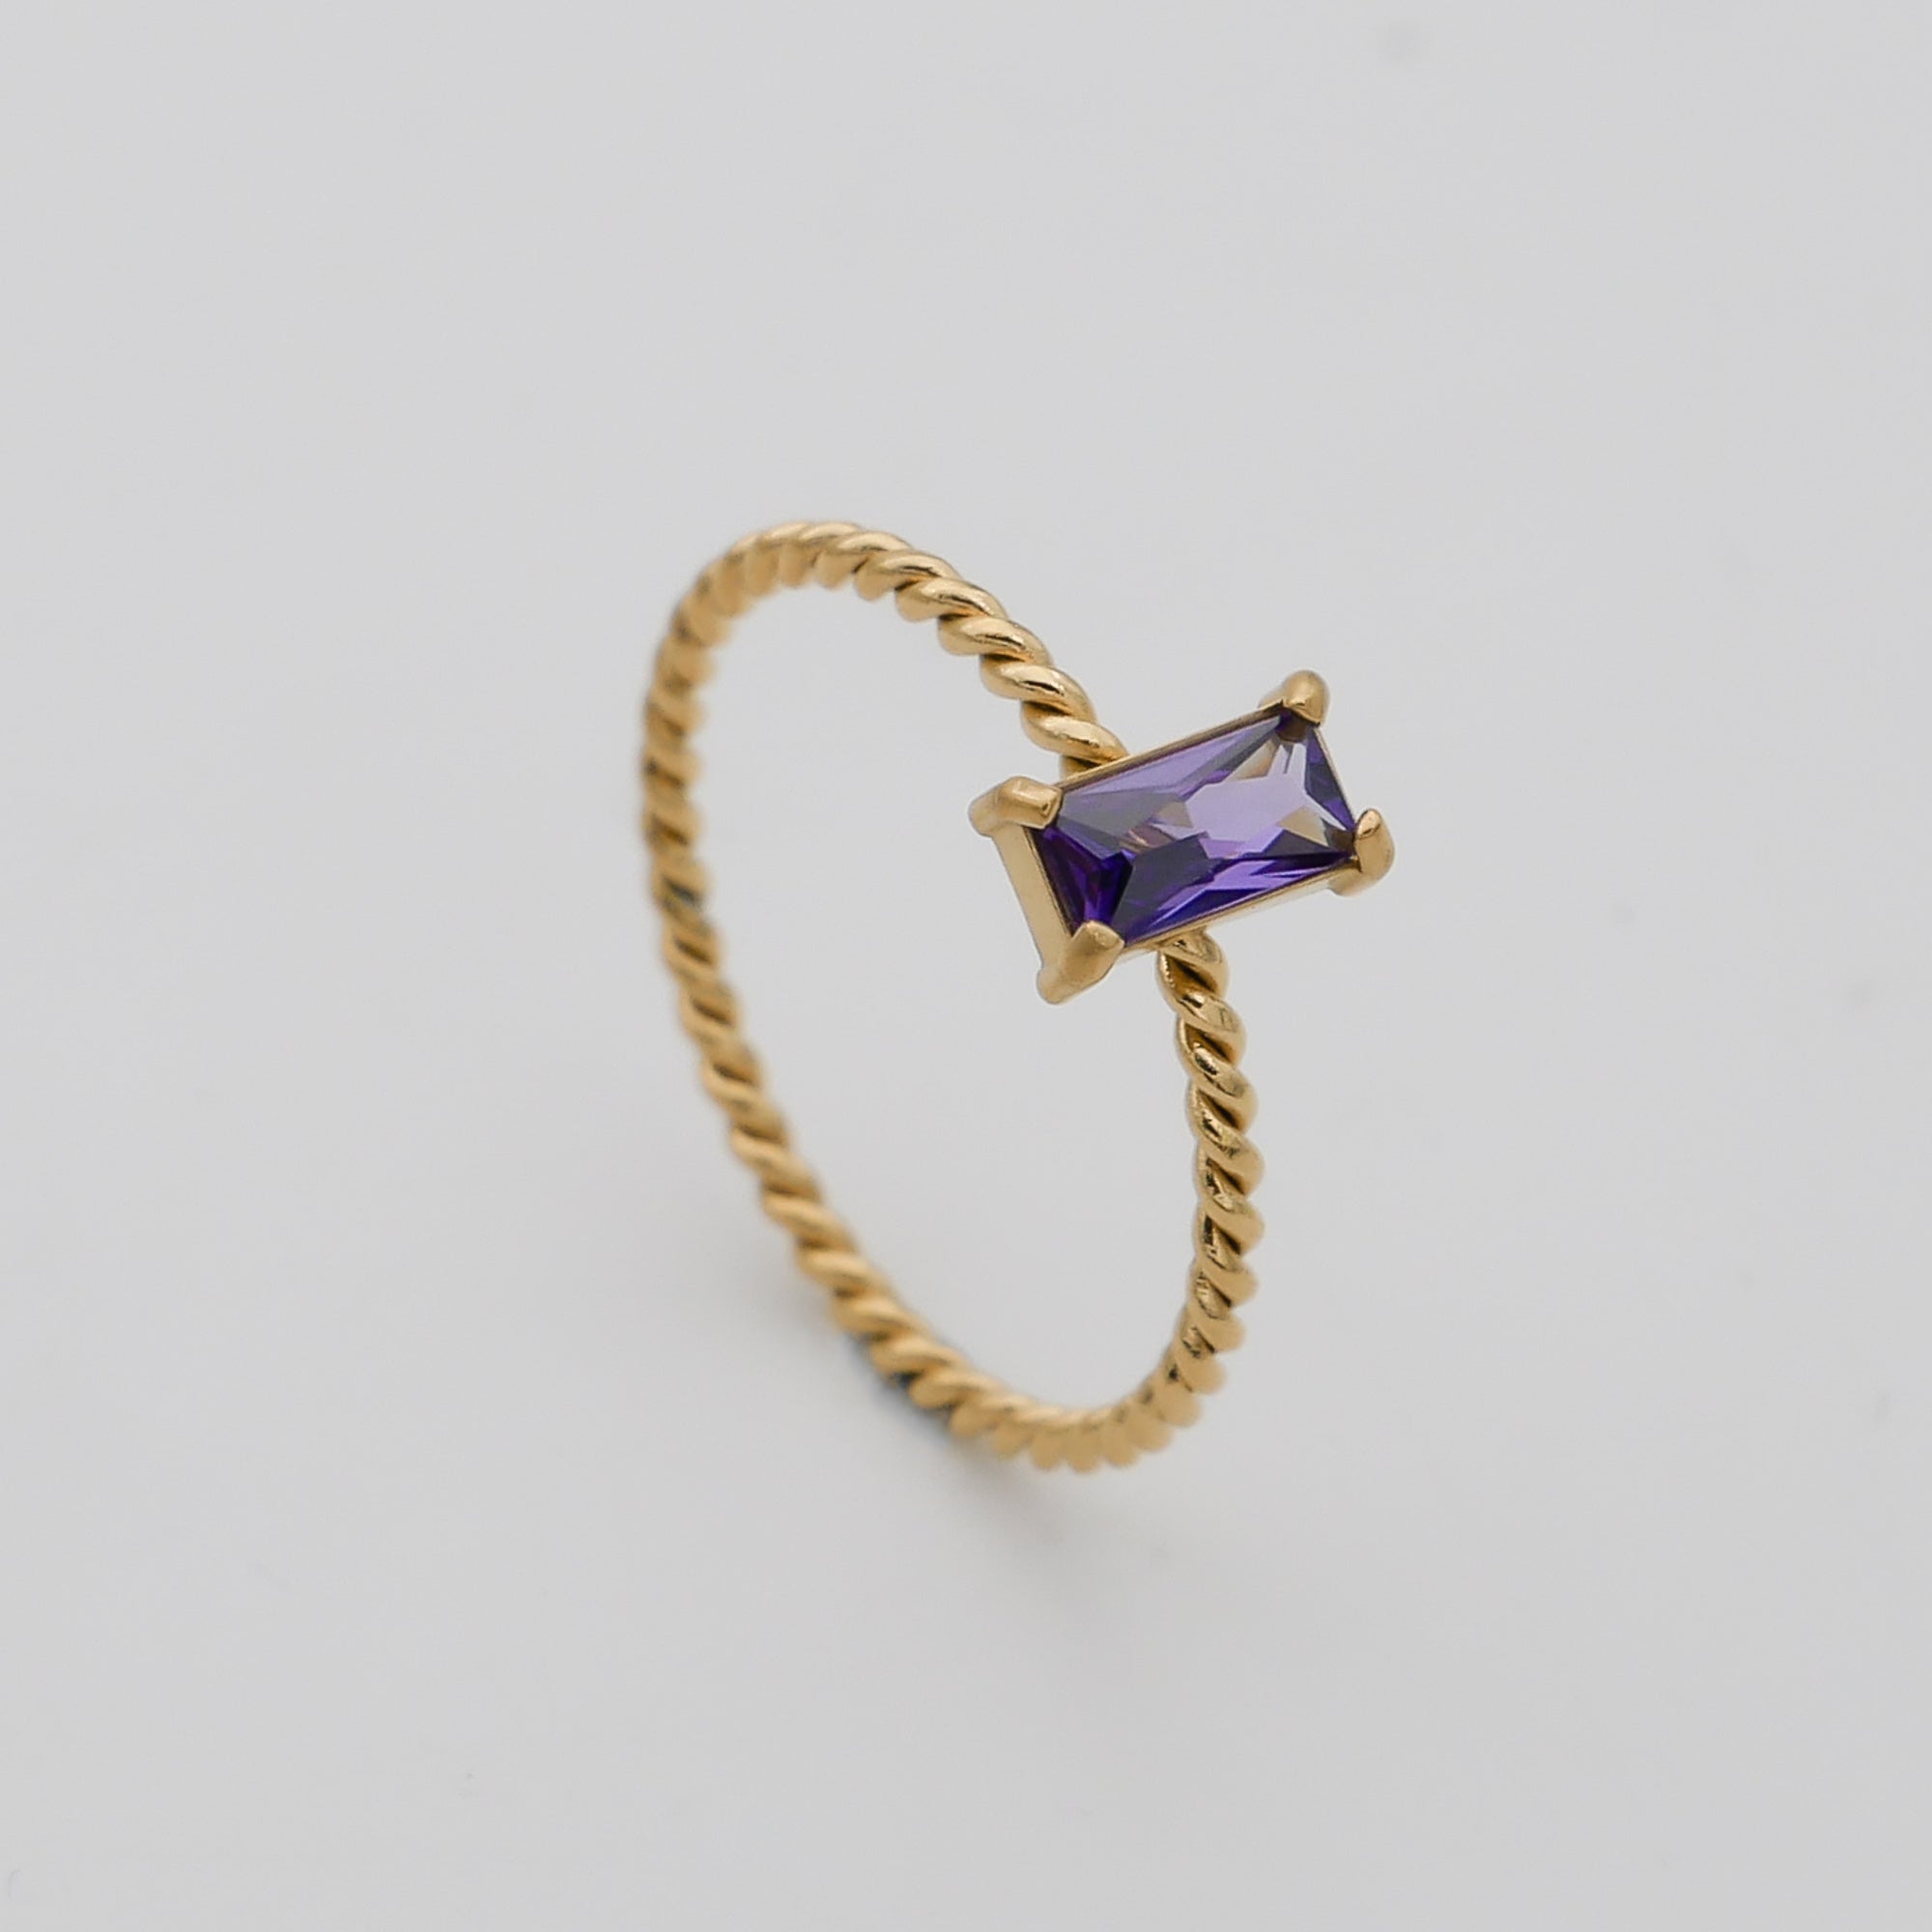 Selin twisted ring in purple cz